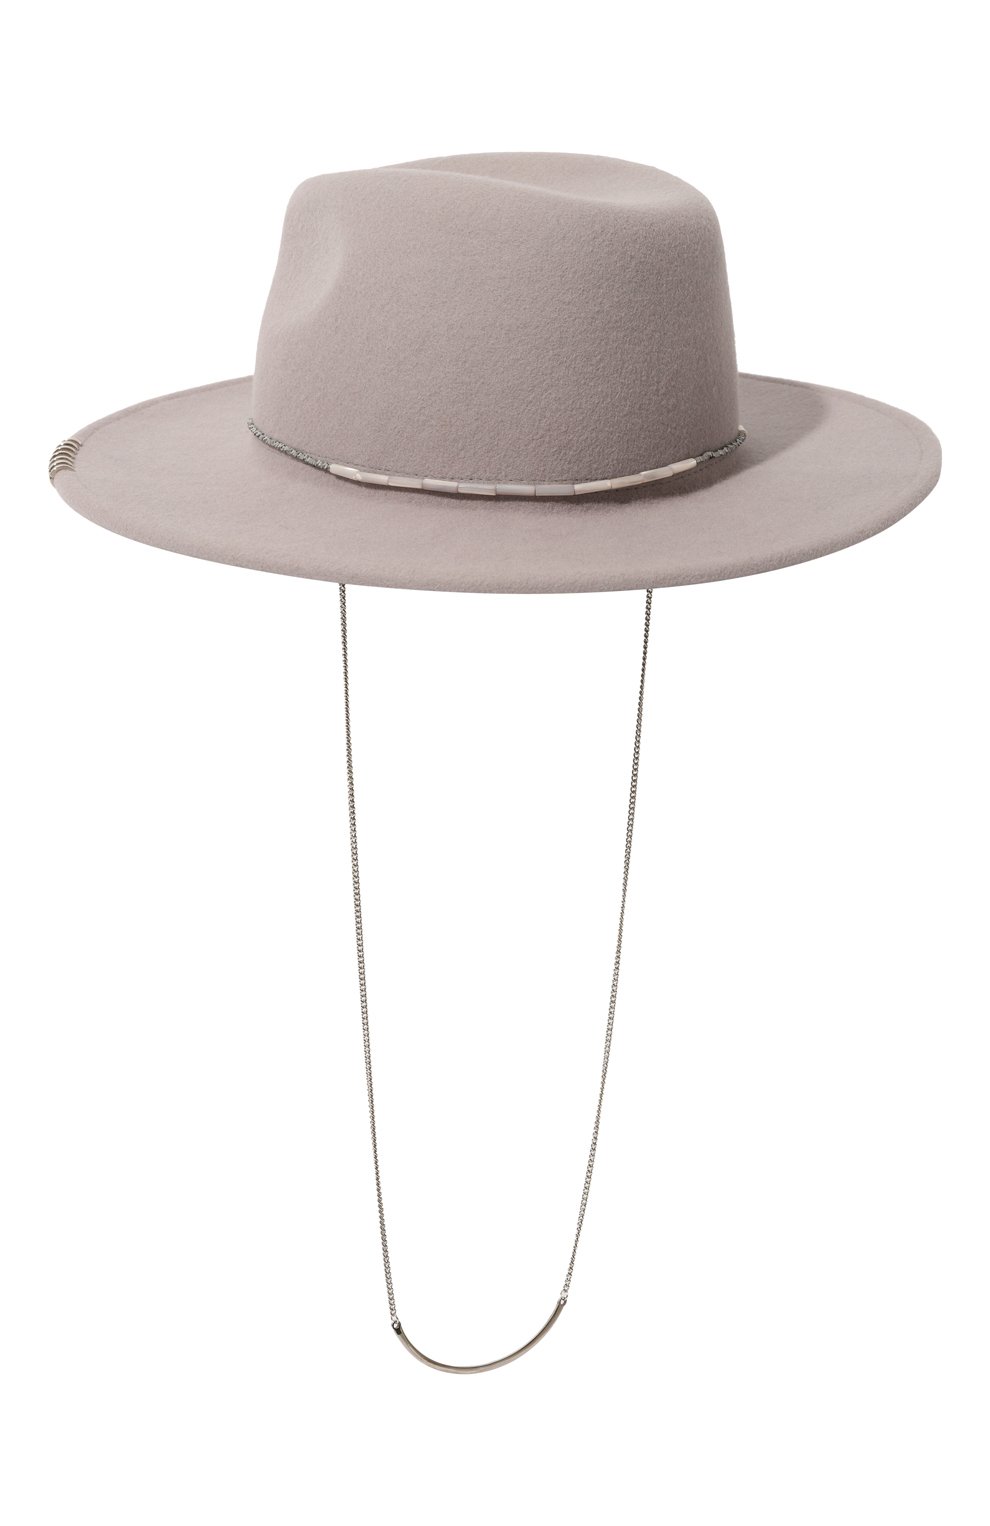 Фетровая шляпа Fedora Klecks #4 COCOSHNICK HEADDRESS FEDORAKLECKS Фото 3